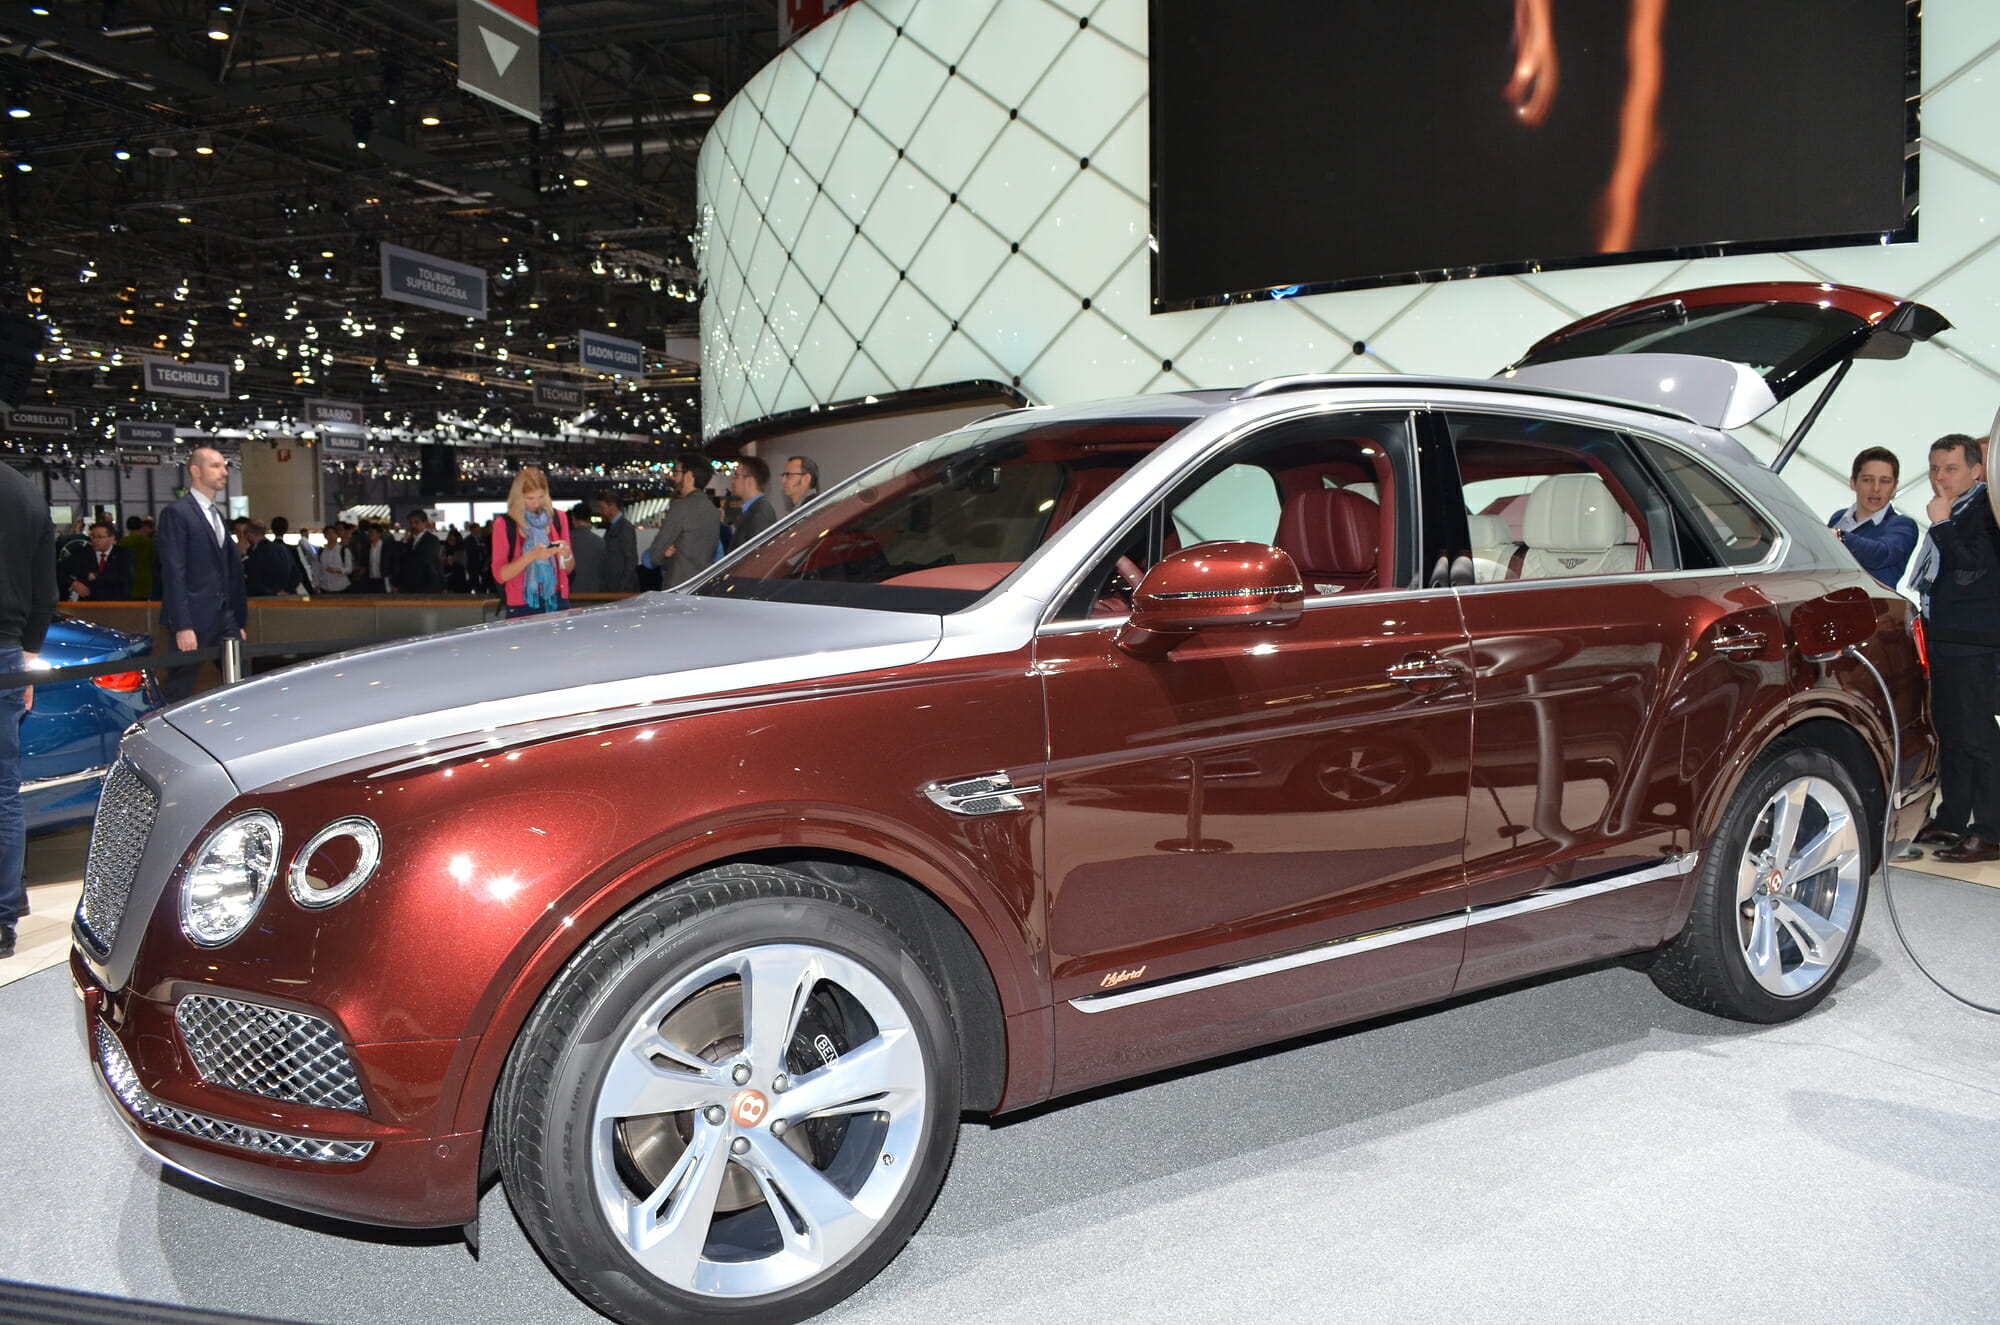 Two-tone Bentley Bentayga Hybrid at autoshow - Vehicle HIstory